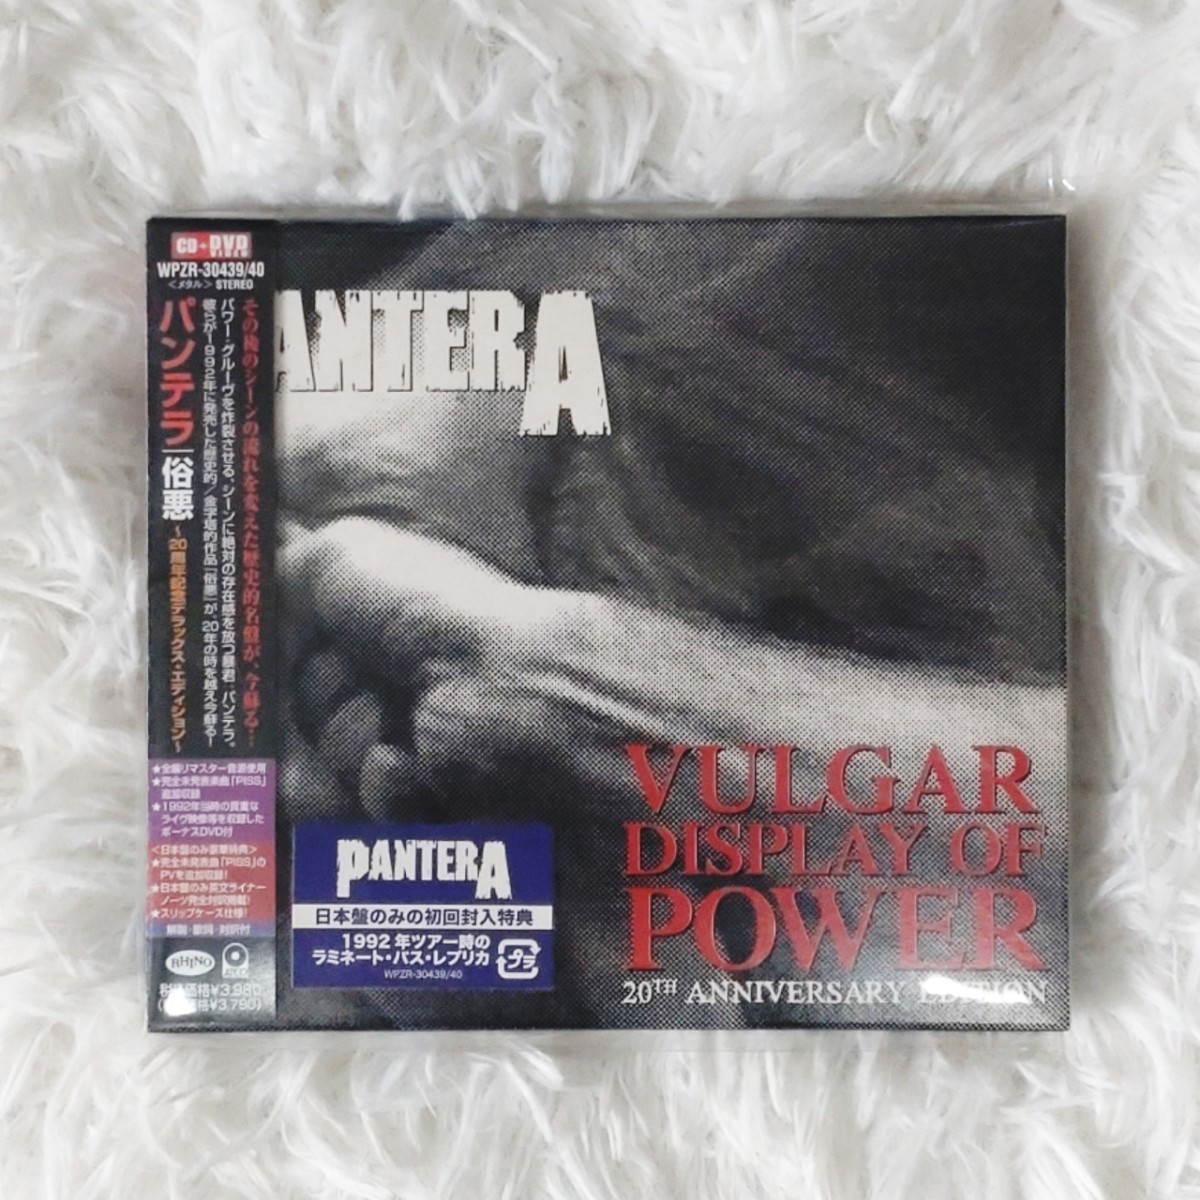 Pantera vulgar display of power 20th Anniversary edition 俗悪 20